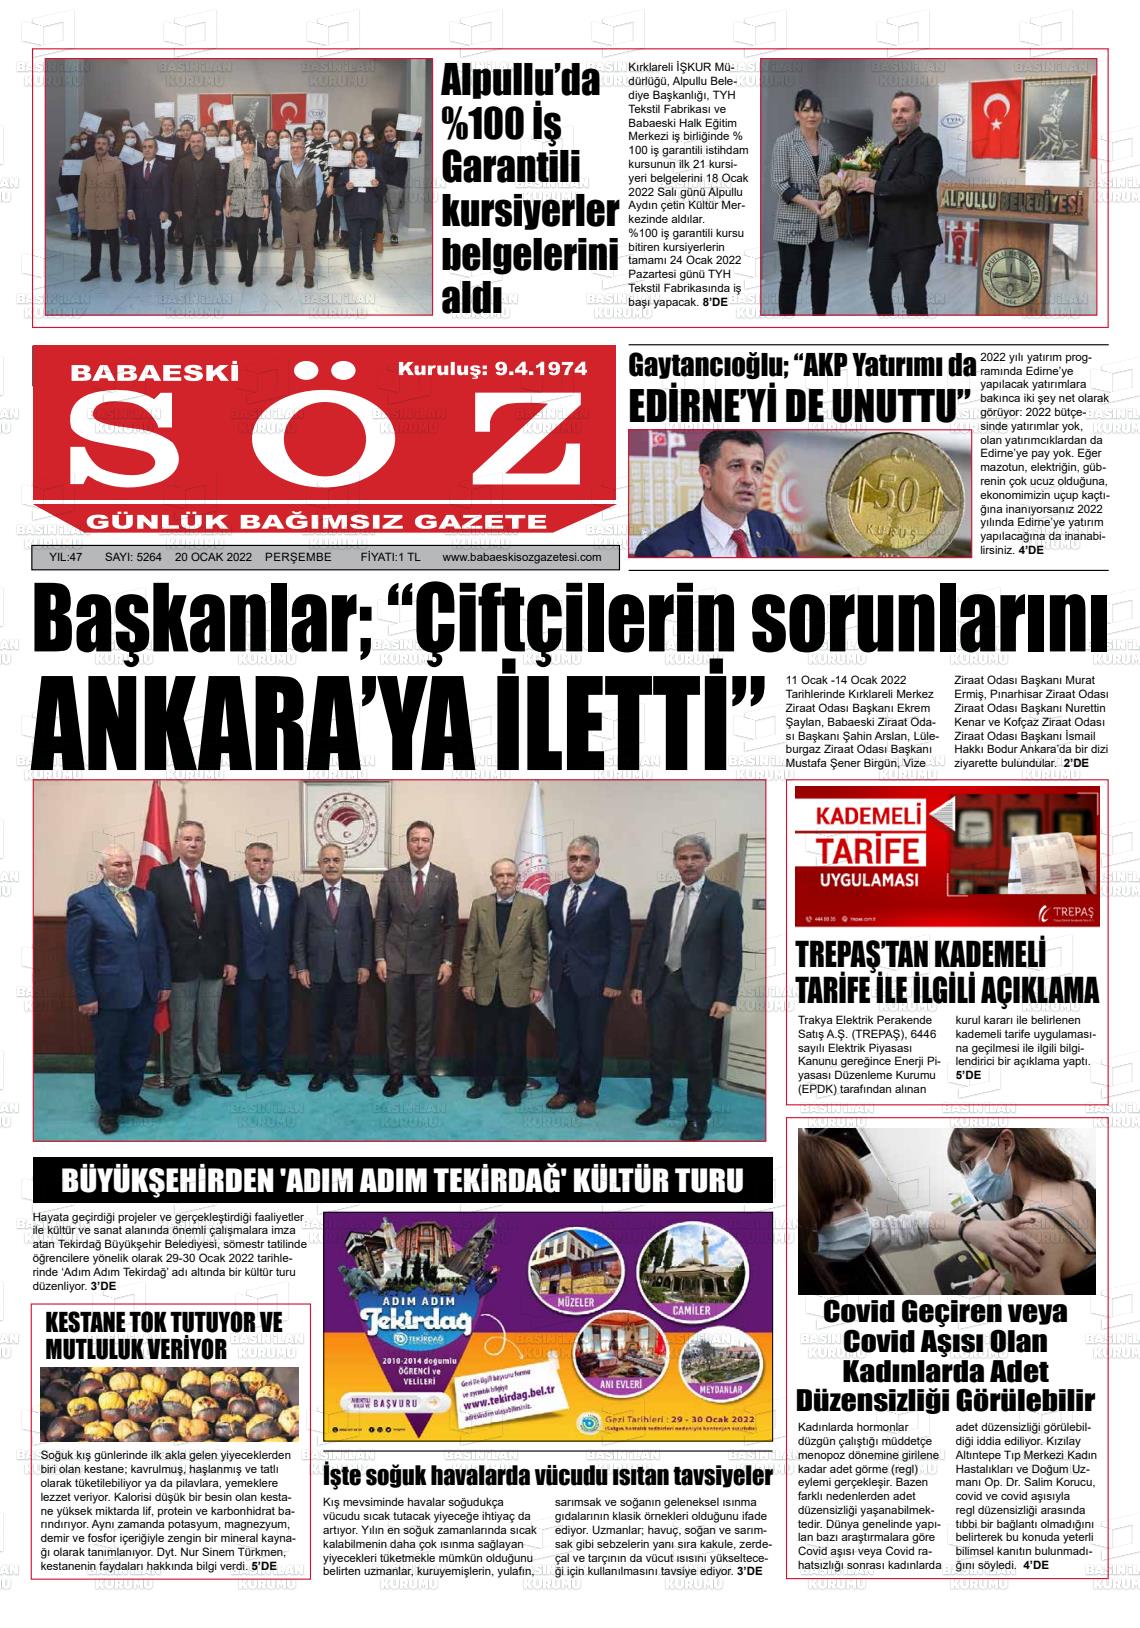 20 Ocak 2022 Babaeski Söz Gazete Manşeti